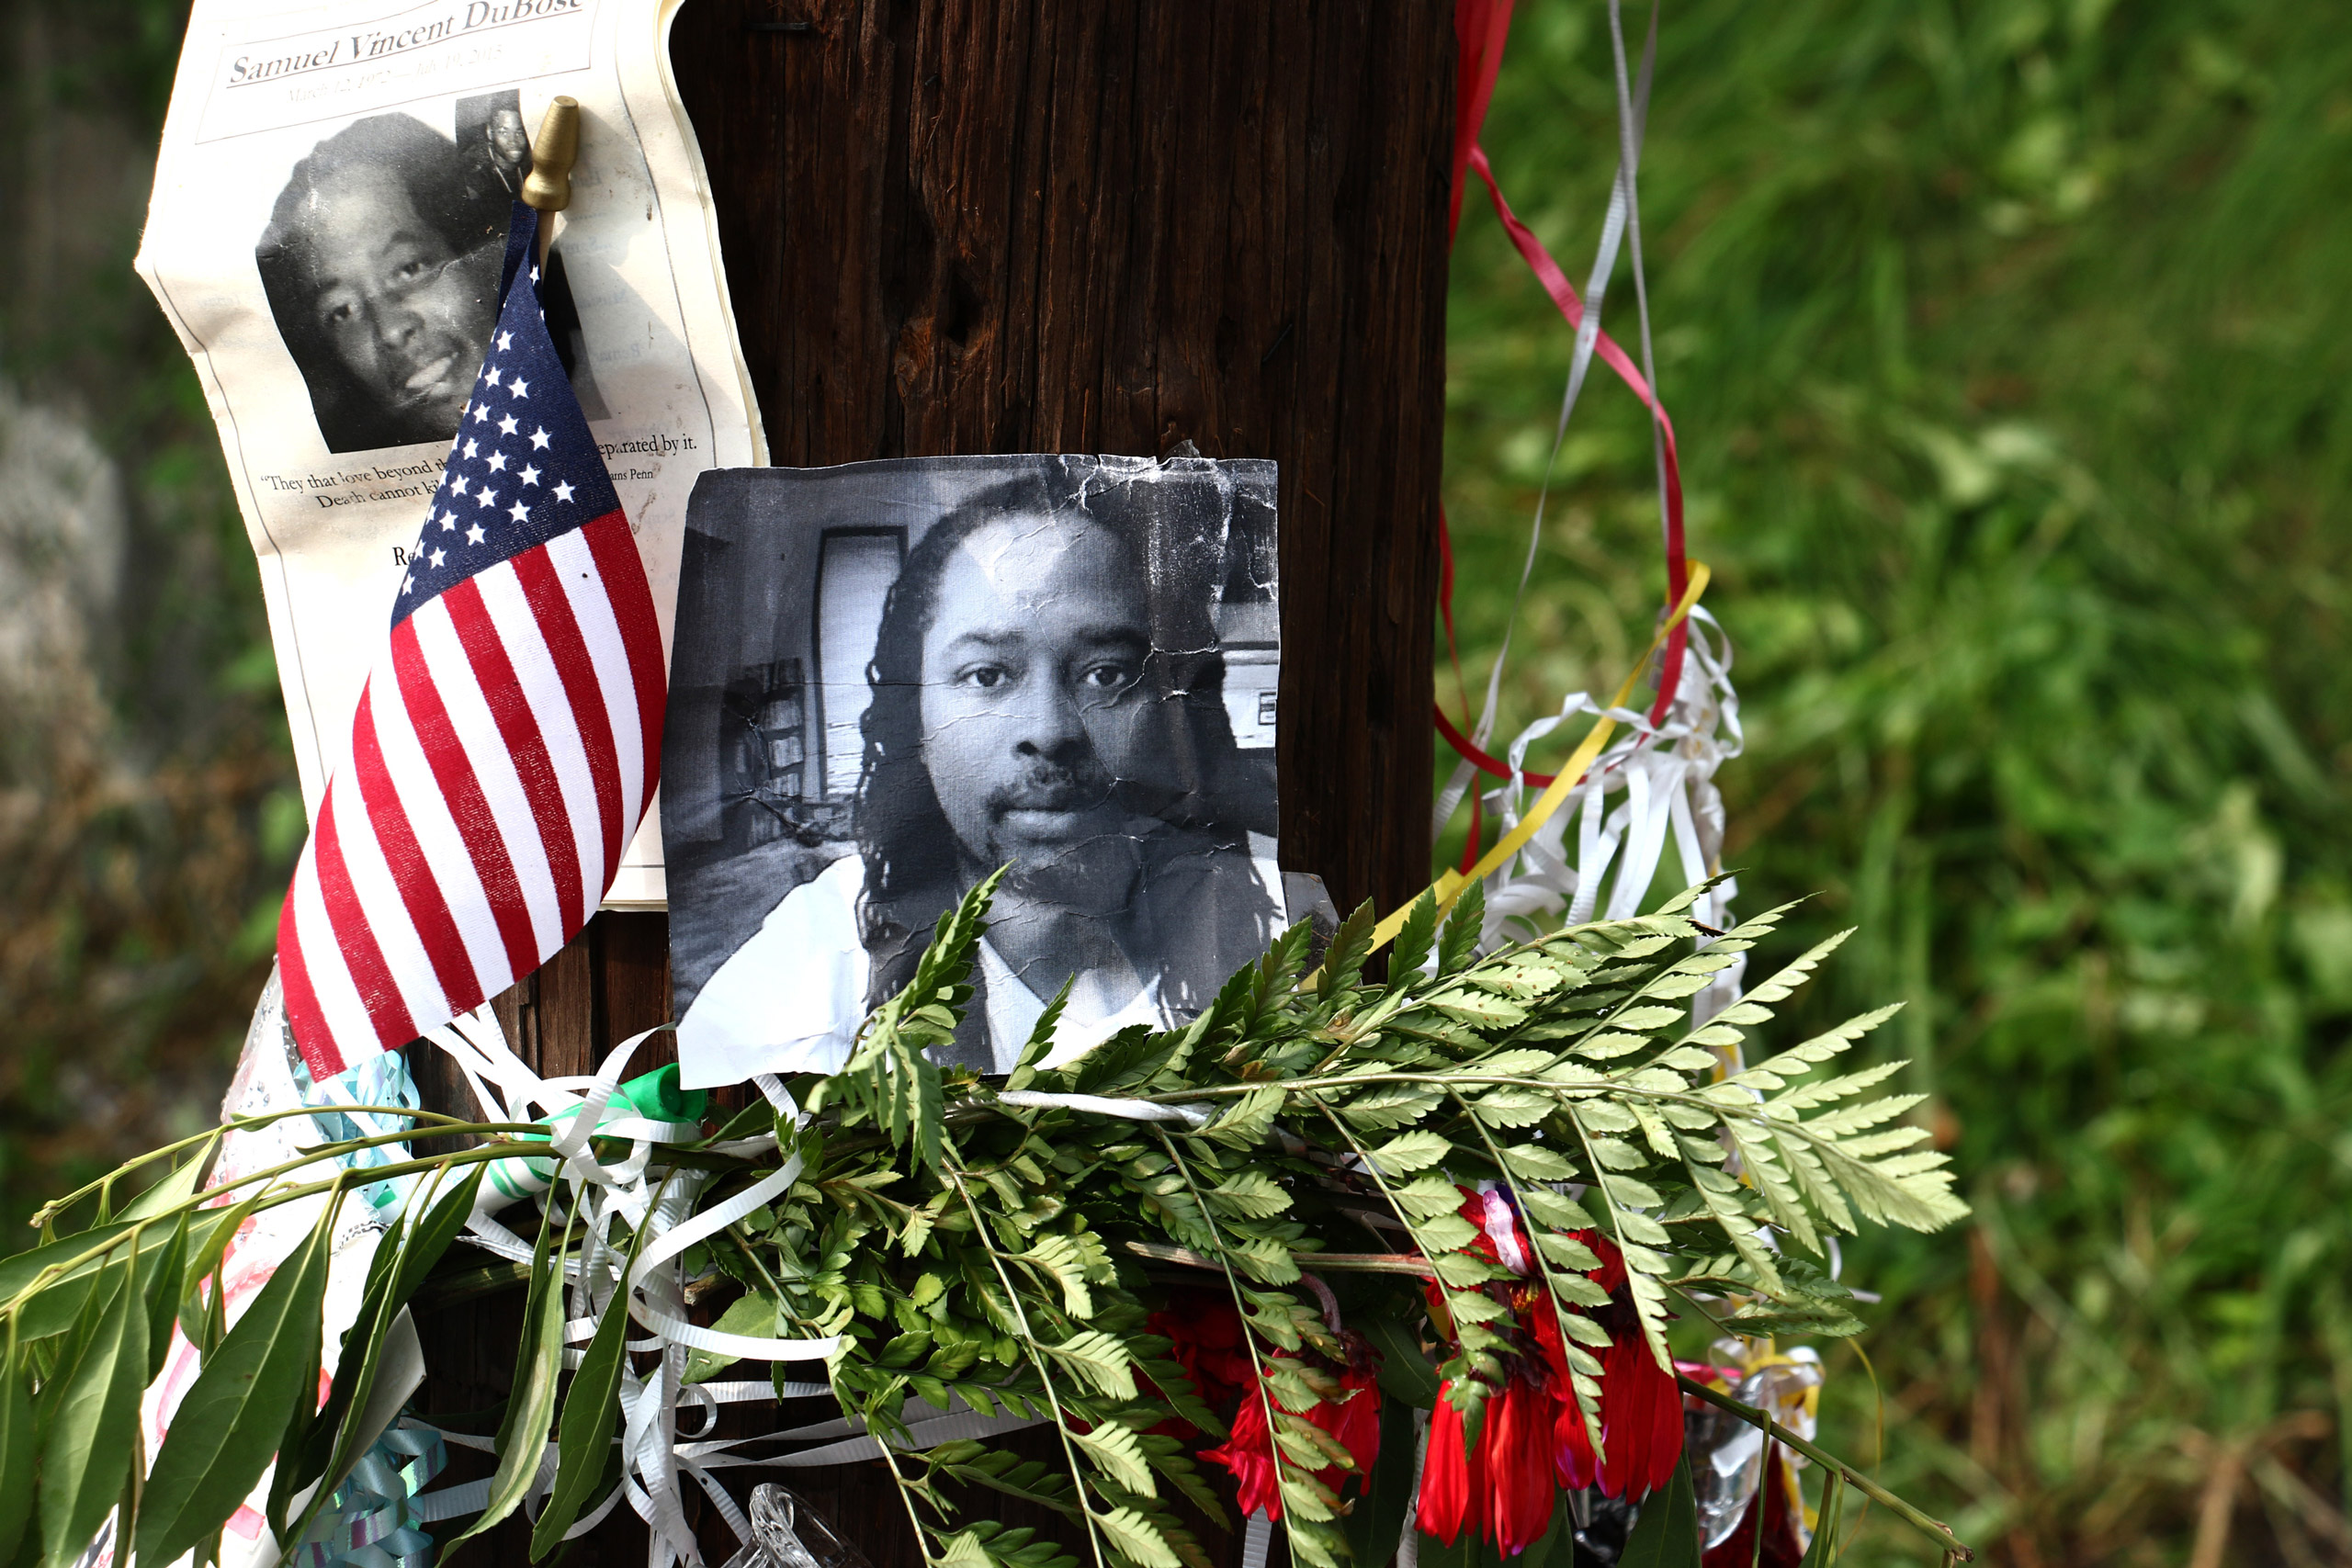 Photos of Samuel DuBose hang on a pole at a memorial  in Cincinnati on July 29, 2015. (Tom Uhlman—AP)